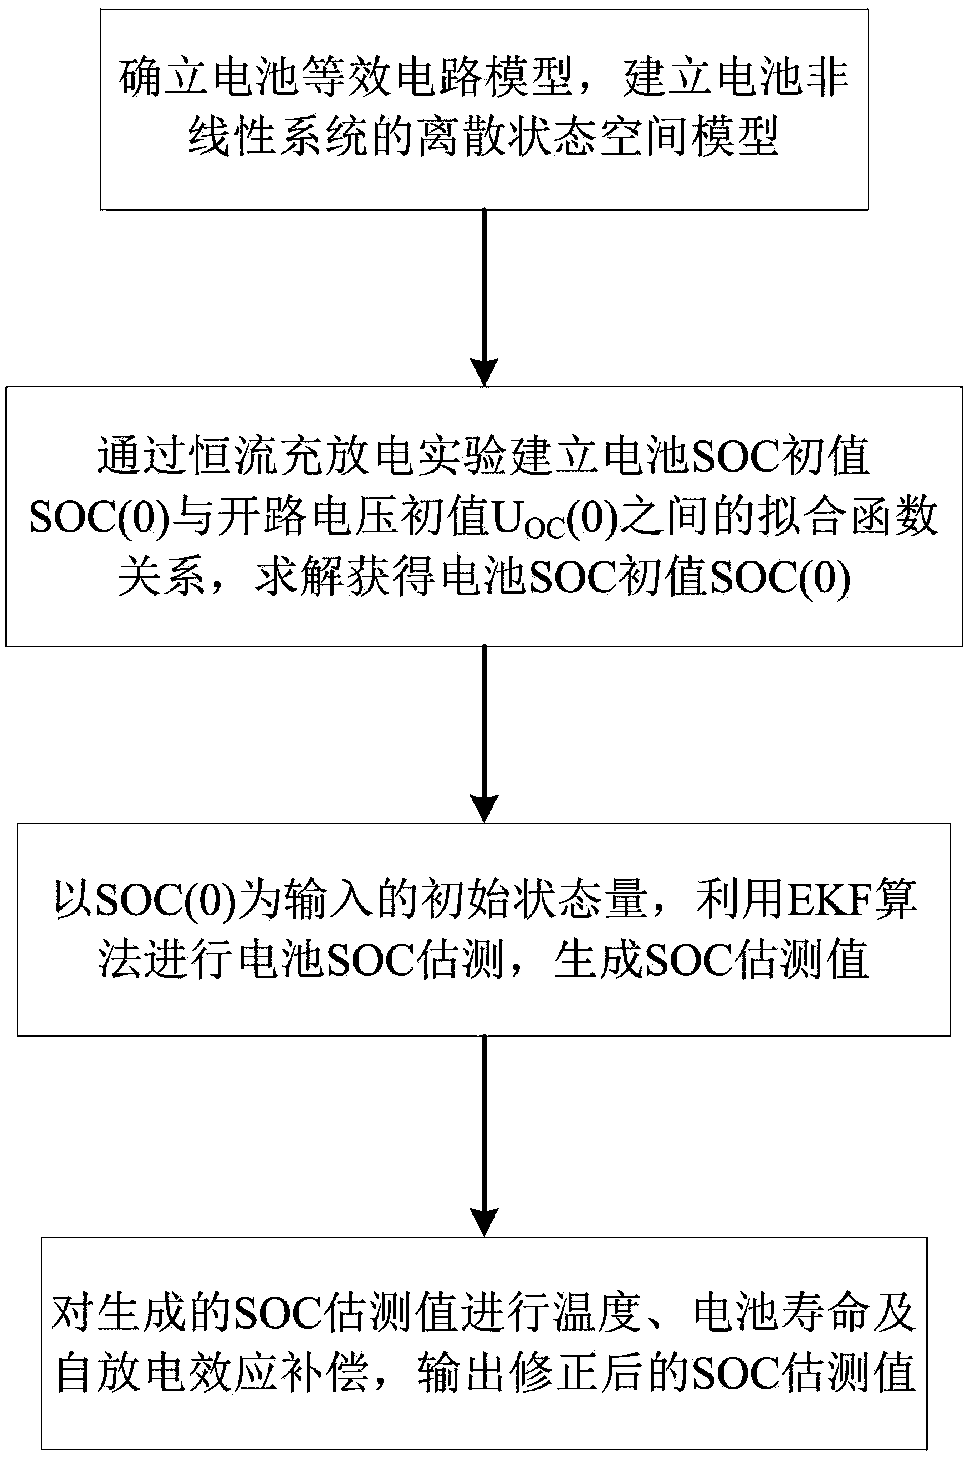 SOC online estimation method for storage battery based on EKF algorithm